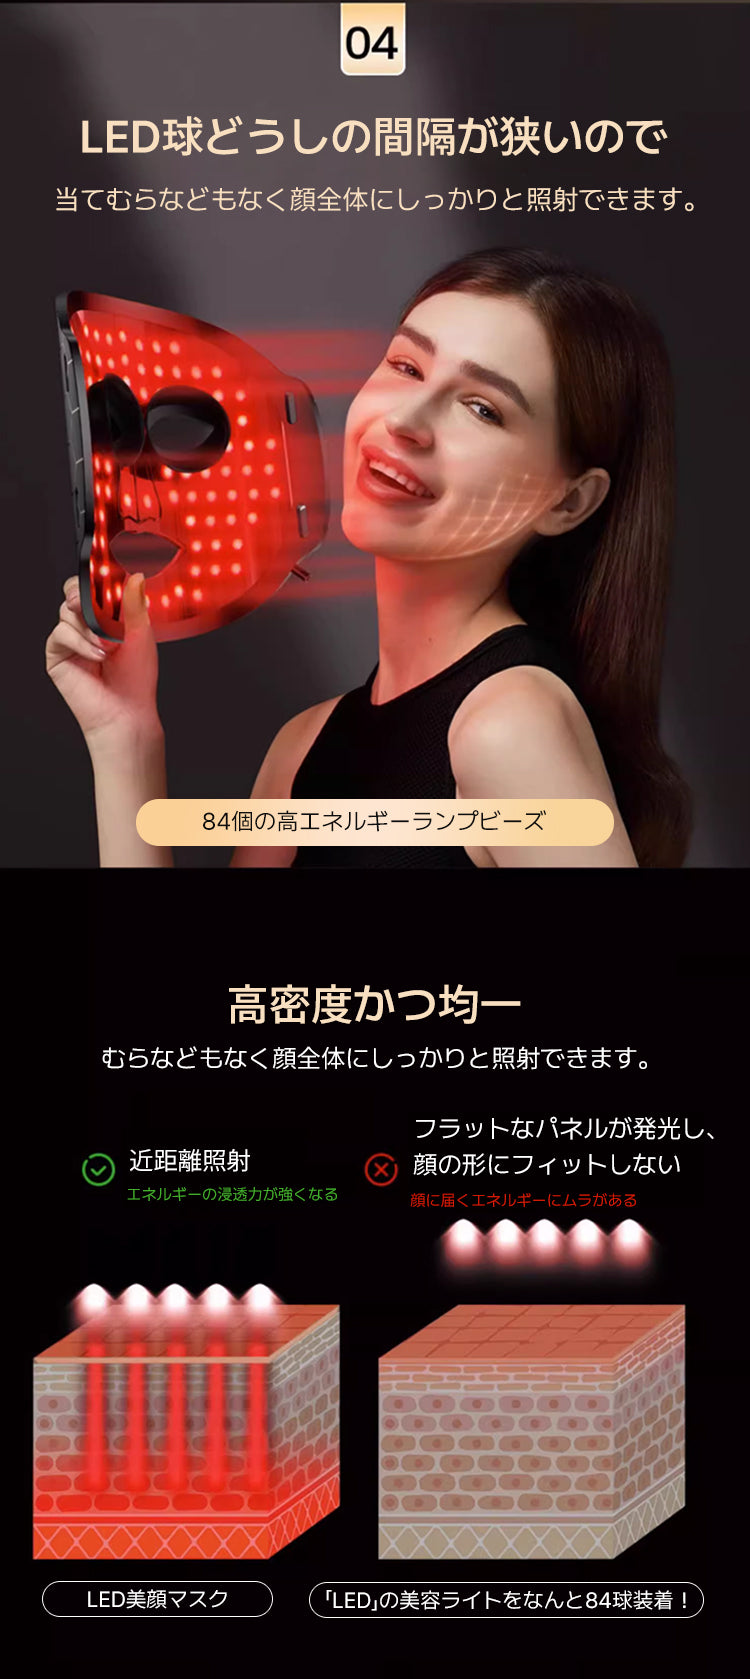 ORIVIN 自宅用美顔器 LED美顔マスク 美顔器 赤外線4色LED光 10分間 